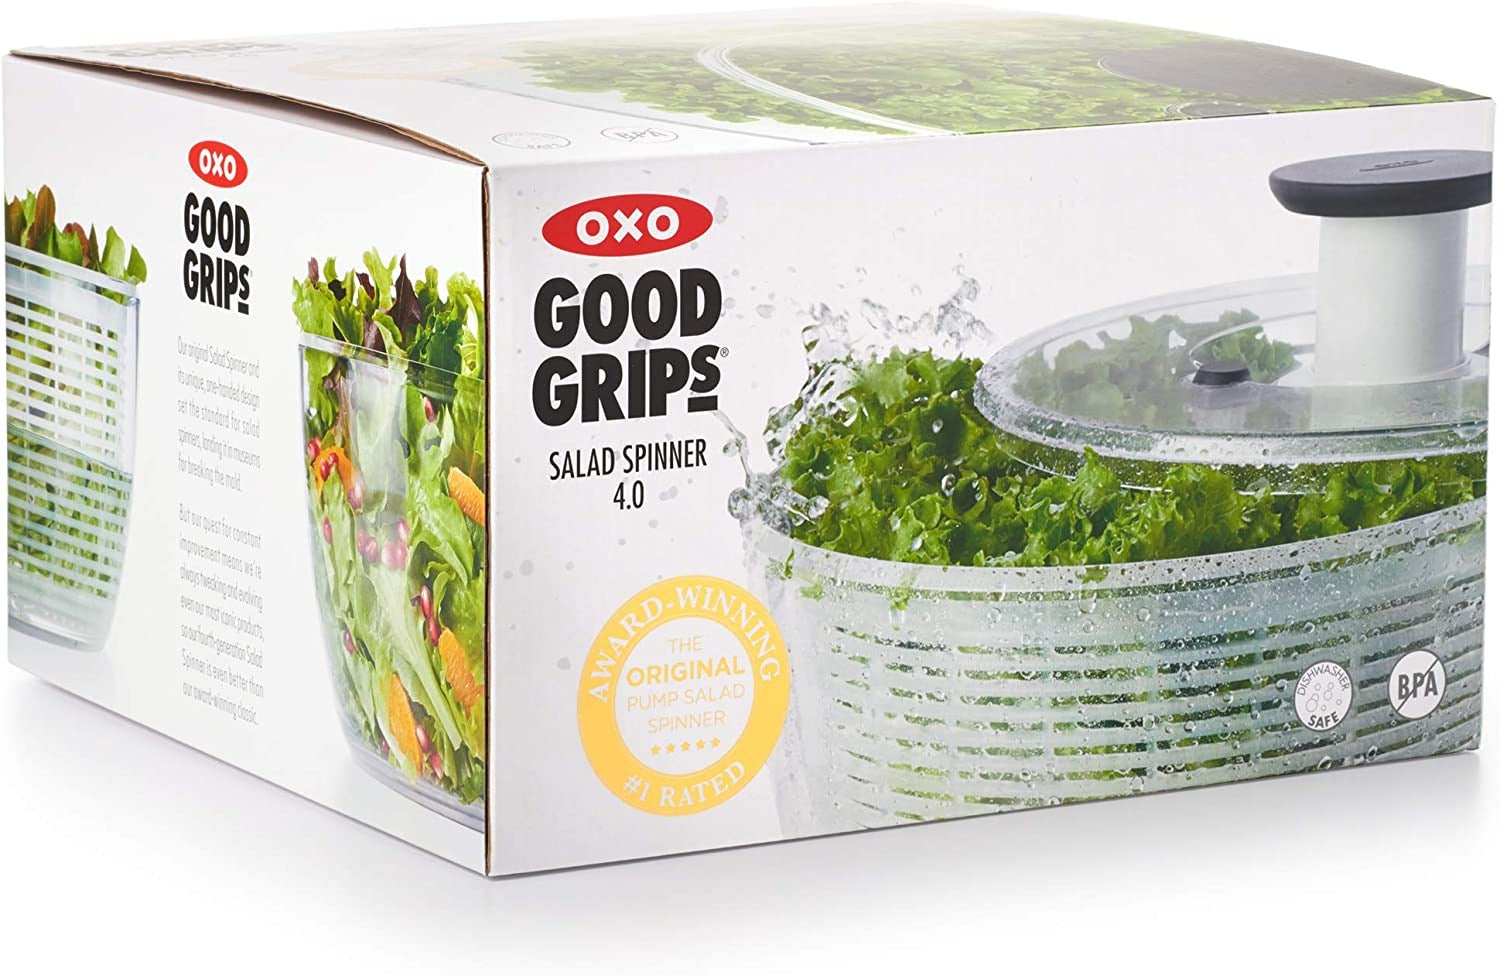 Oxo - Steel Salad Spinner